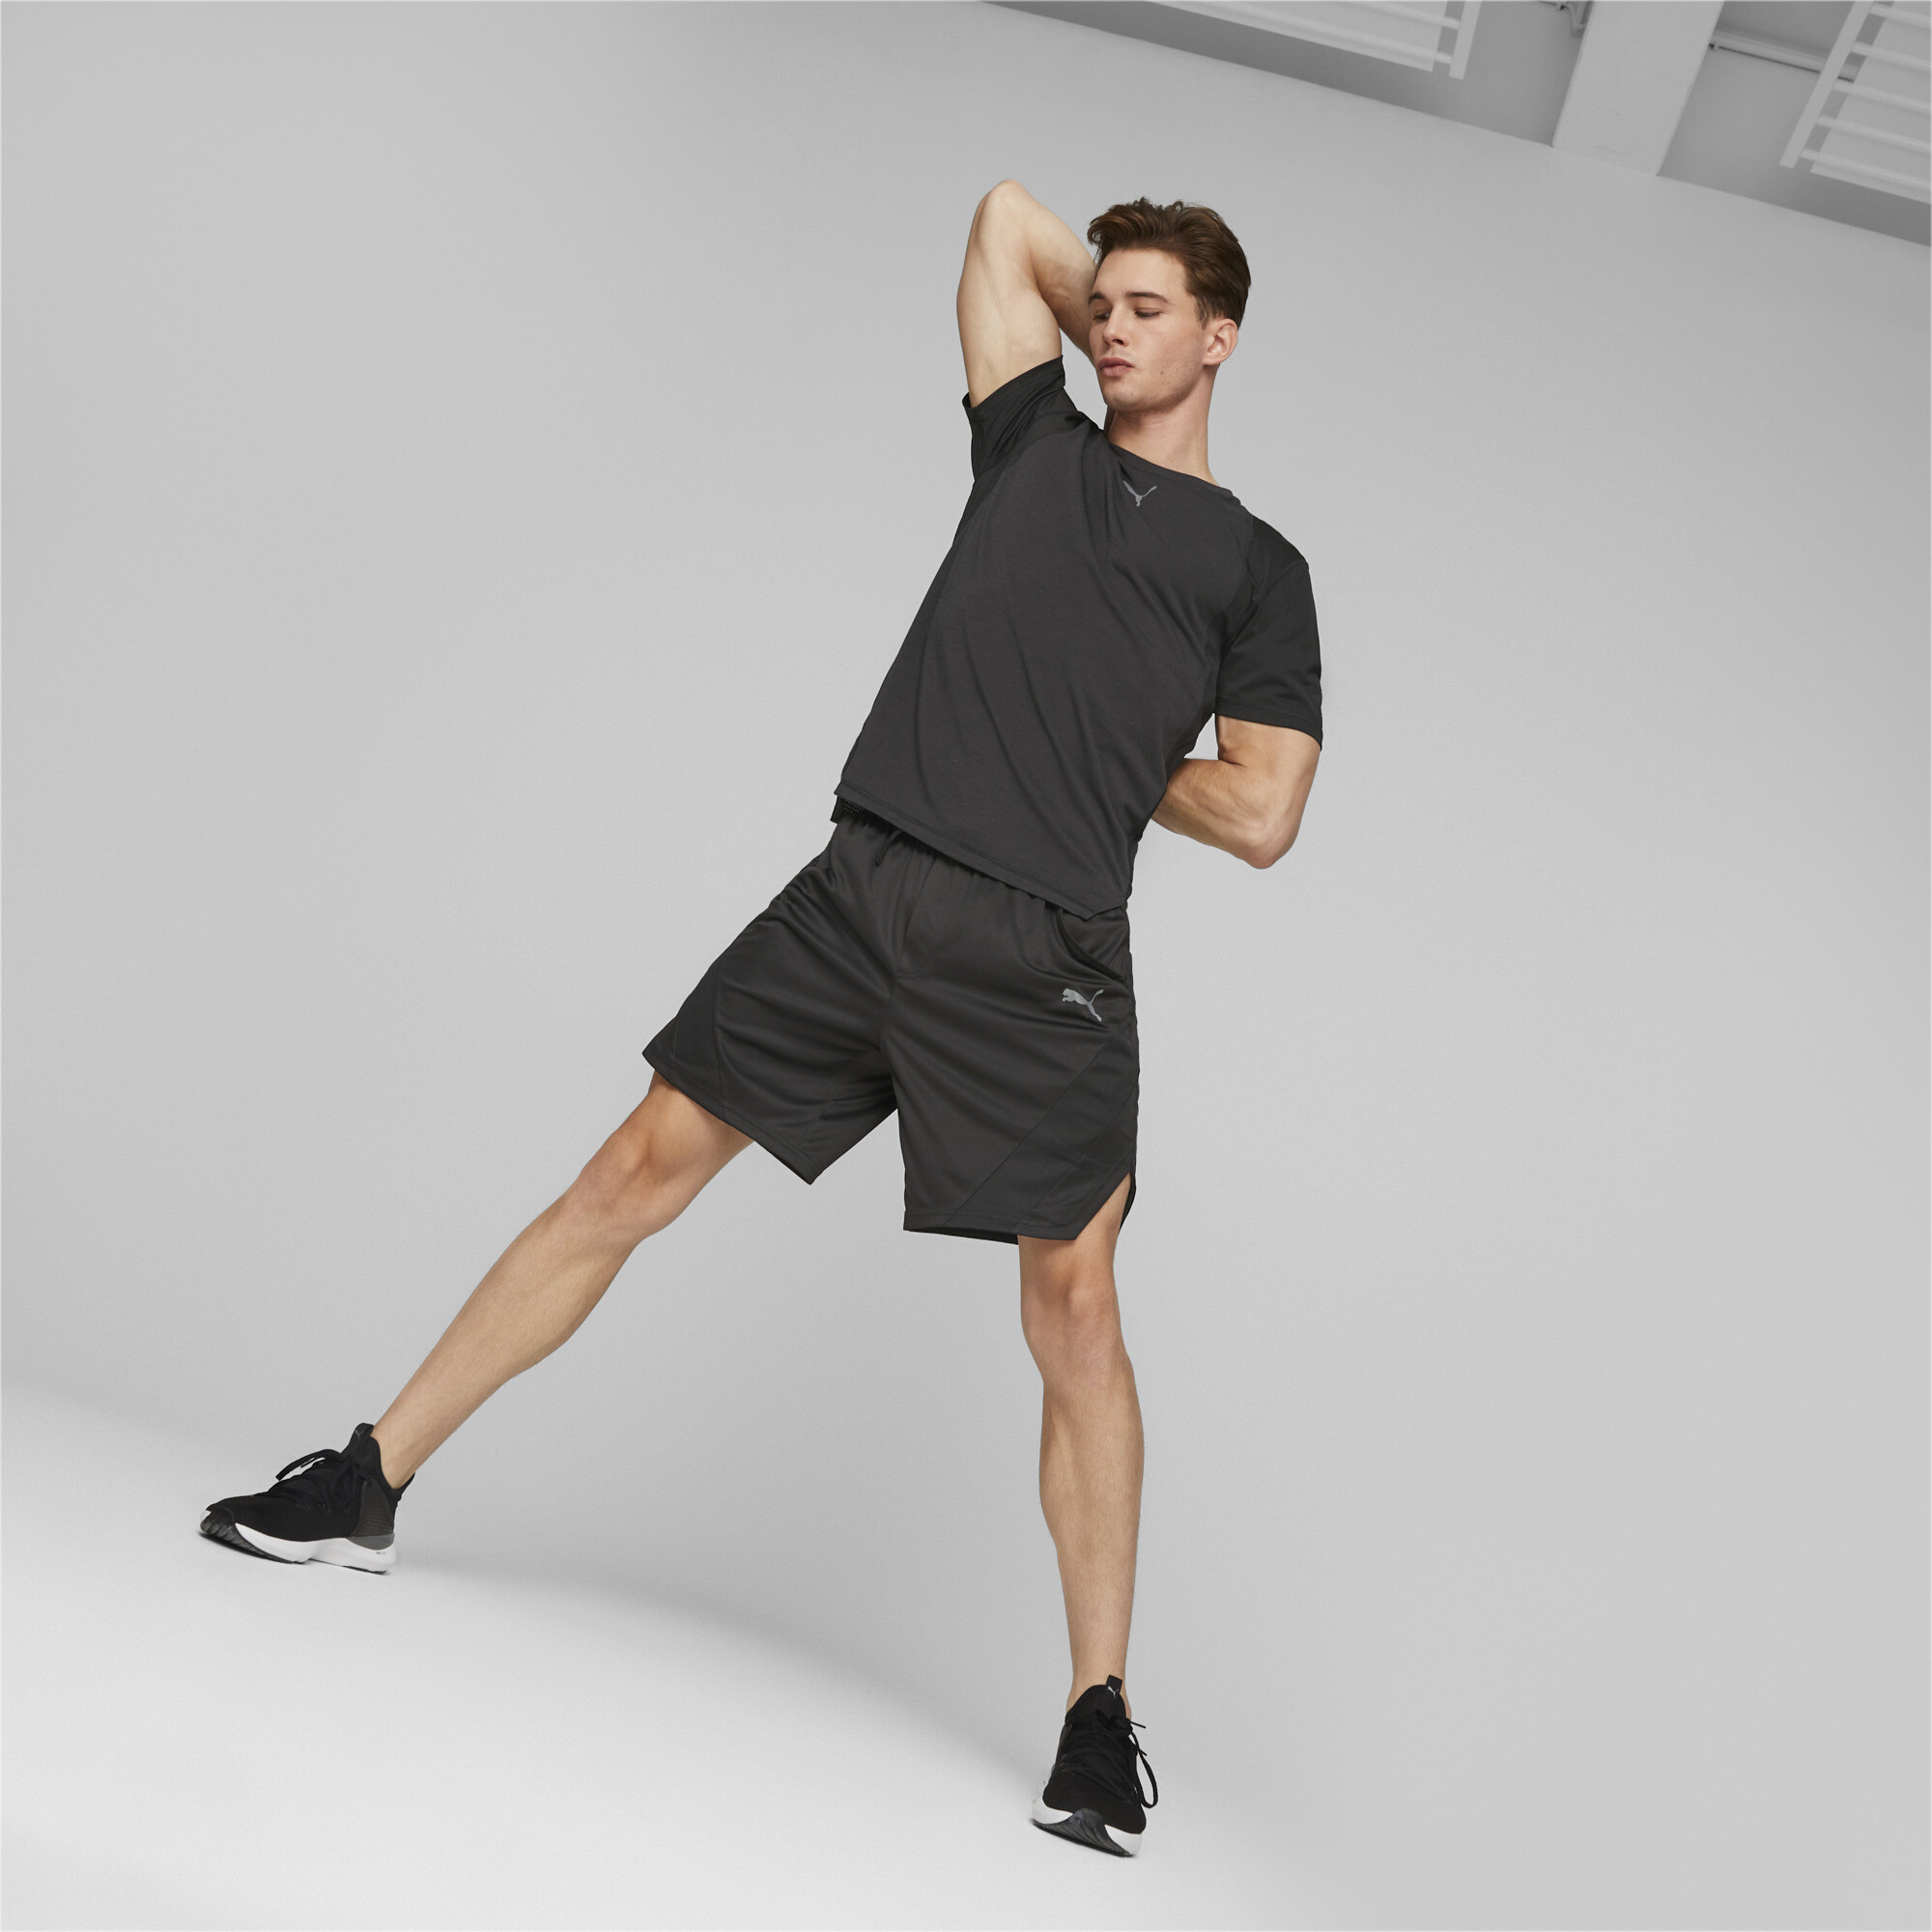 Men's PUMA Engineered For Strength Training T-Shirt Men In 10 - Black, Size XL